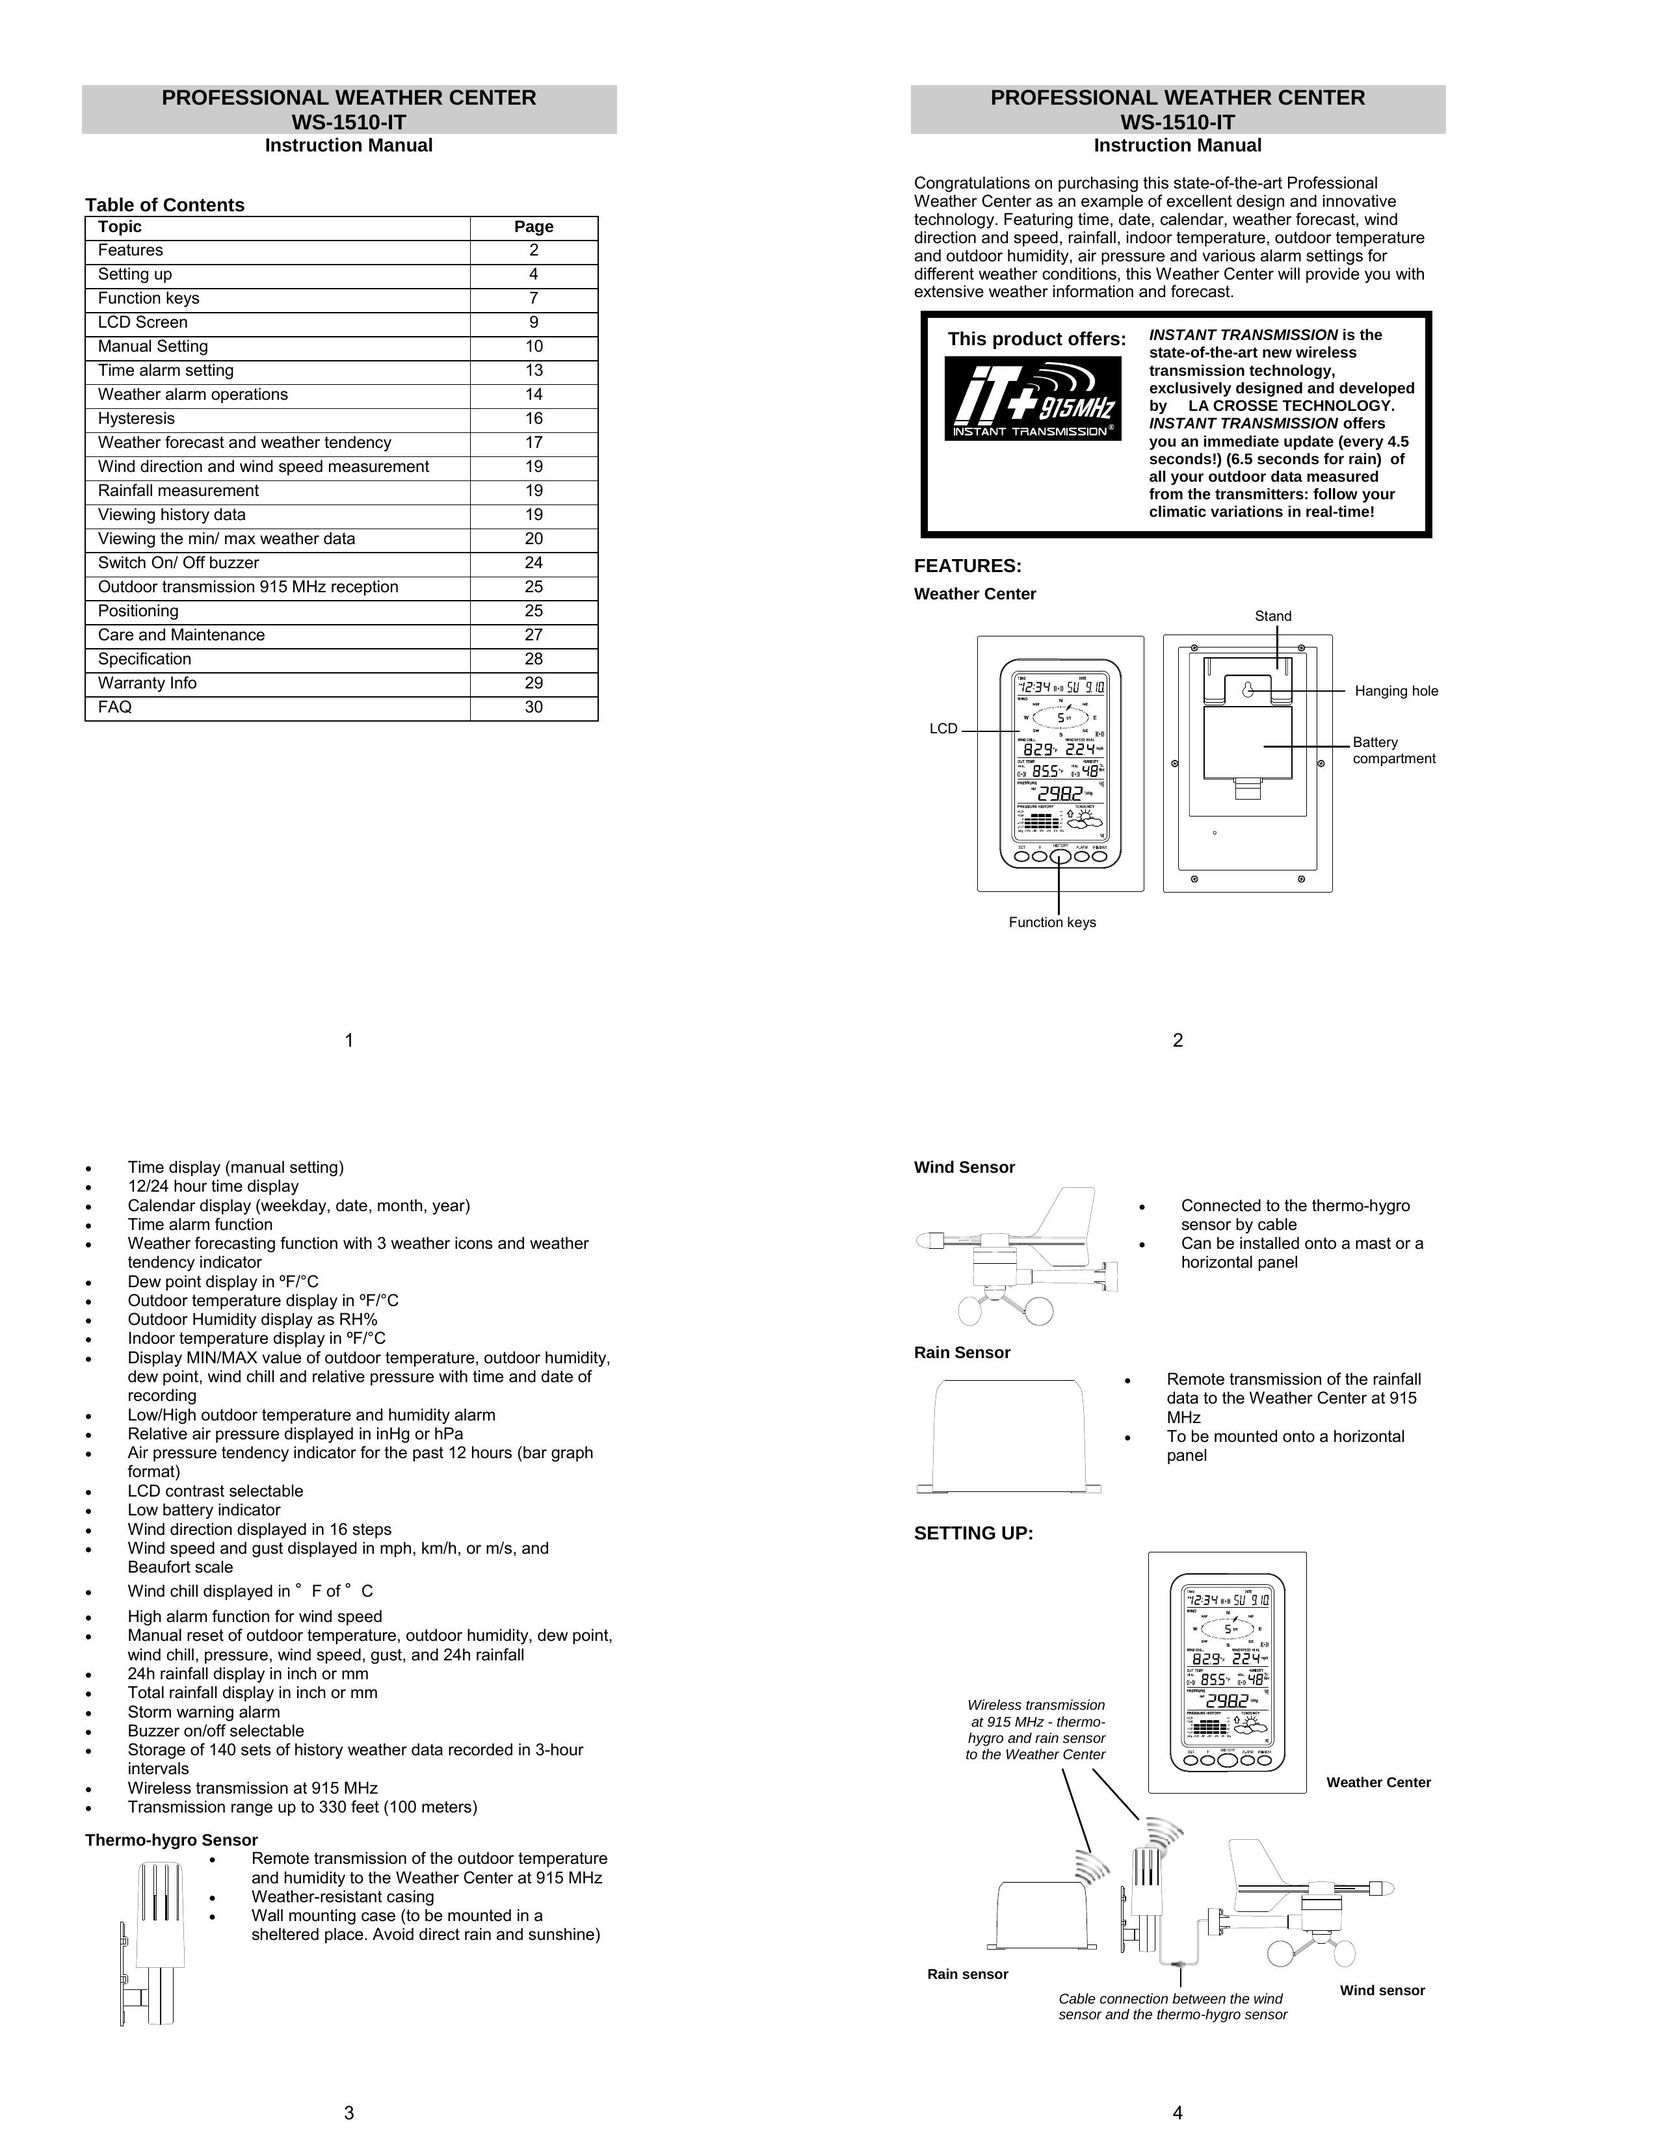 La Crosse Technology WS-1510-IT Portable Radio User Manual